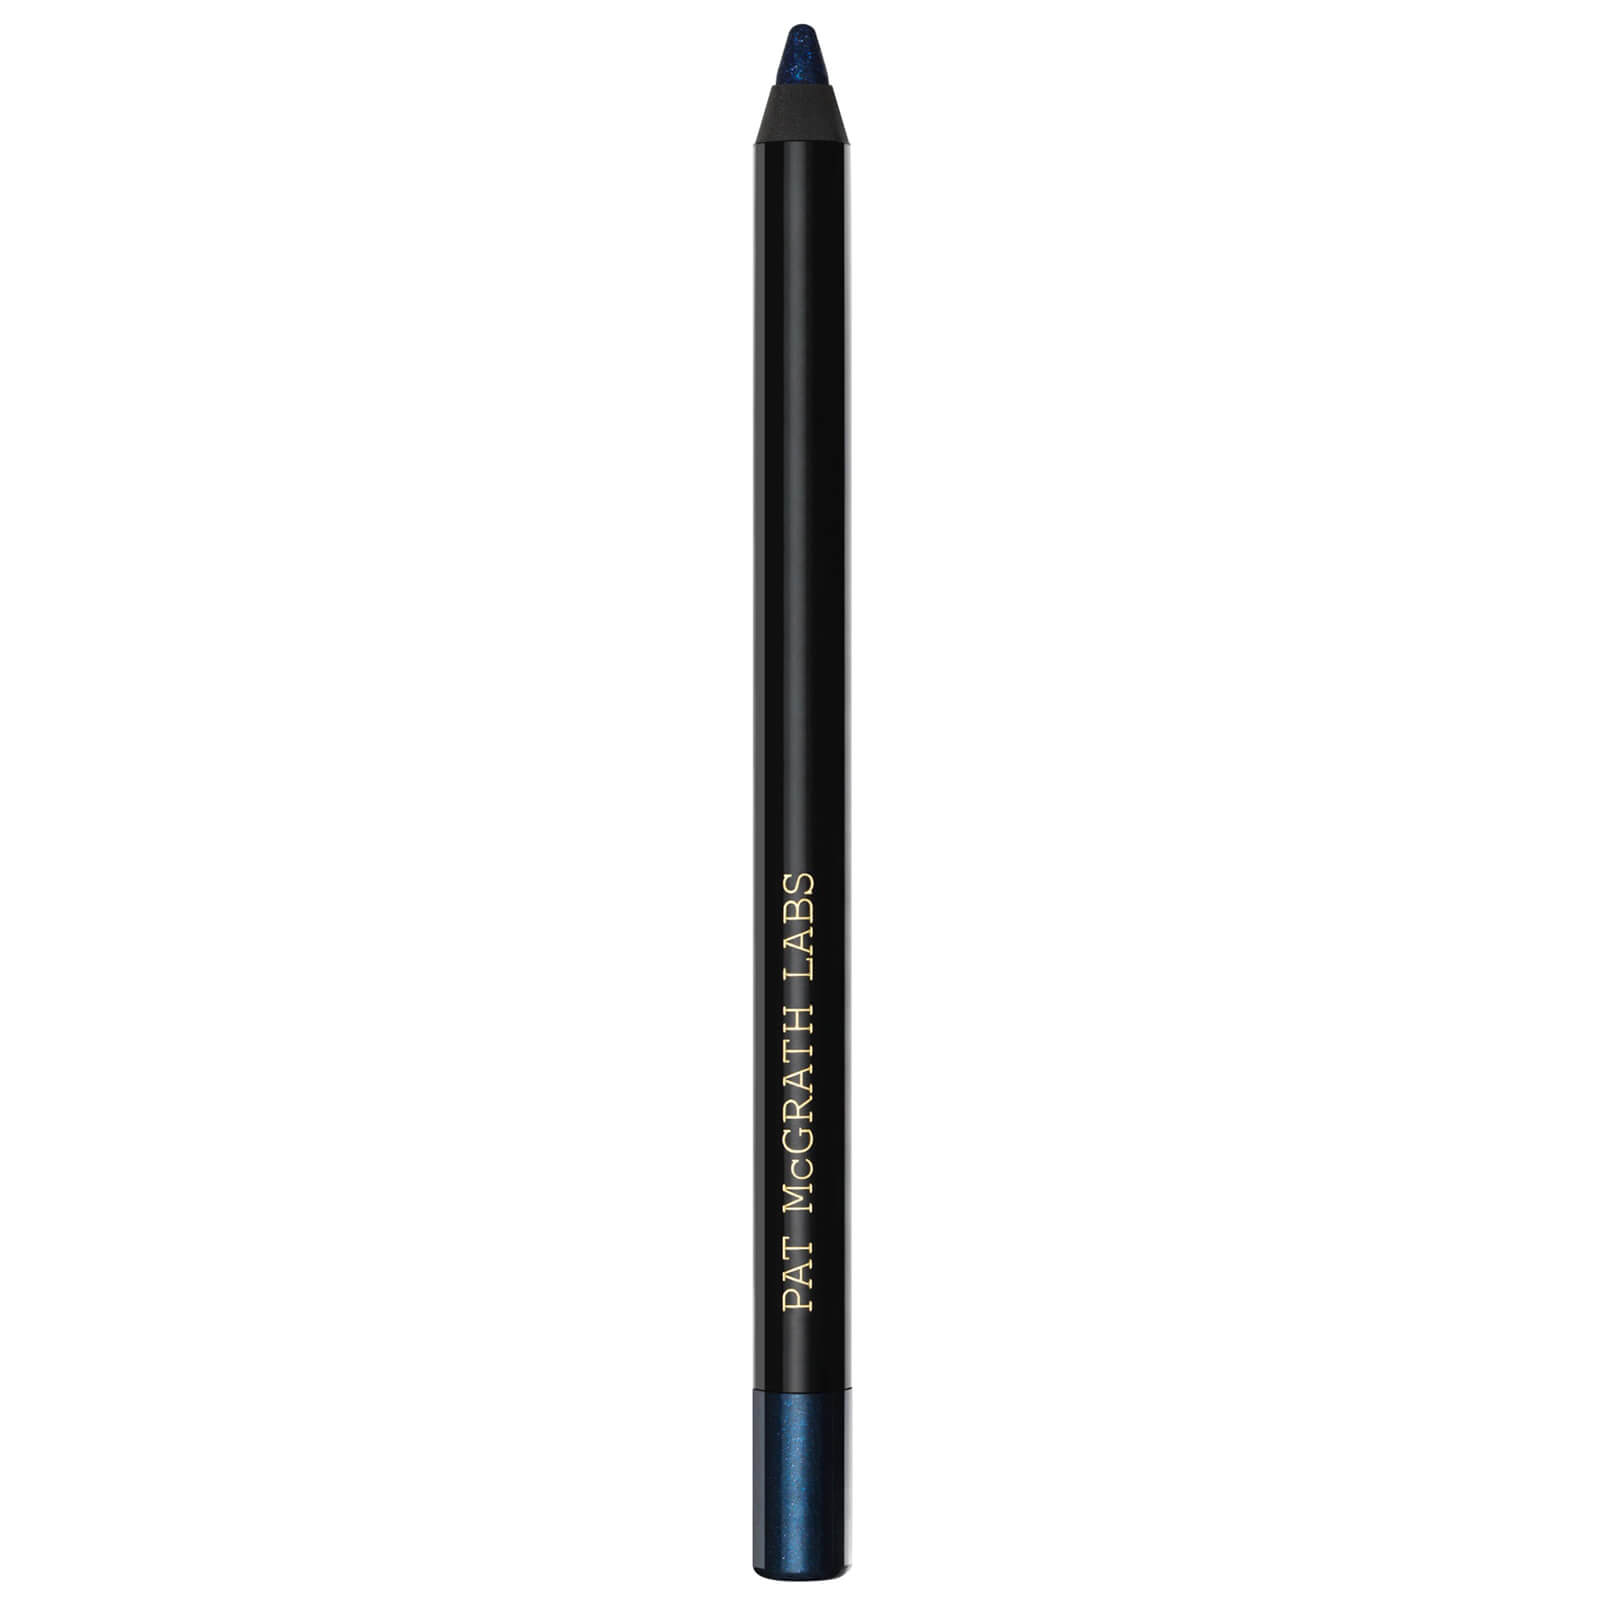 Pat Mcgrath Labs Permagel Ultra Eye Pencil 1.2g (various Shades) - Blitz Blue